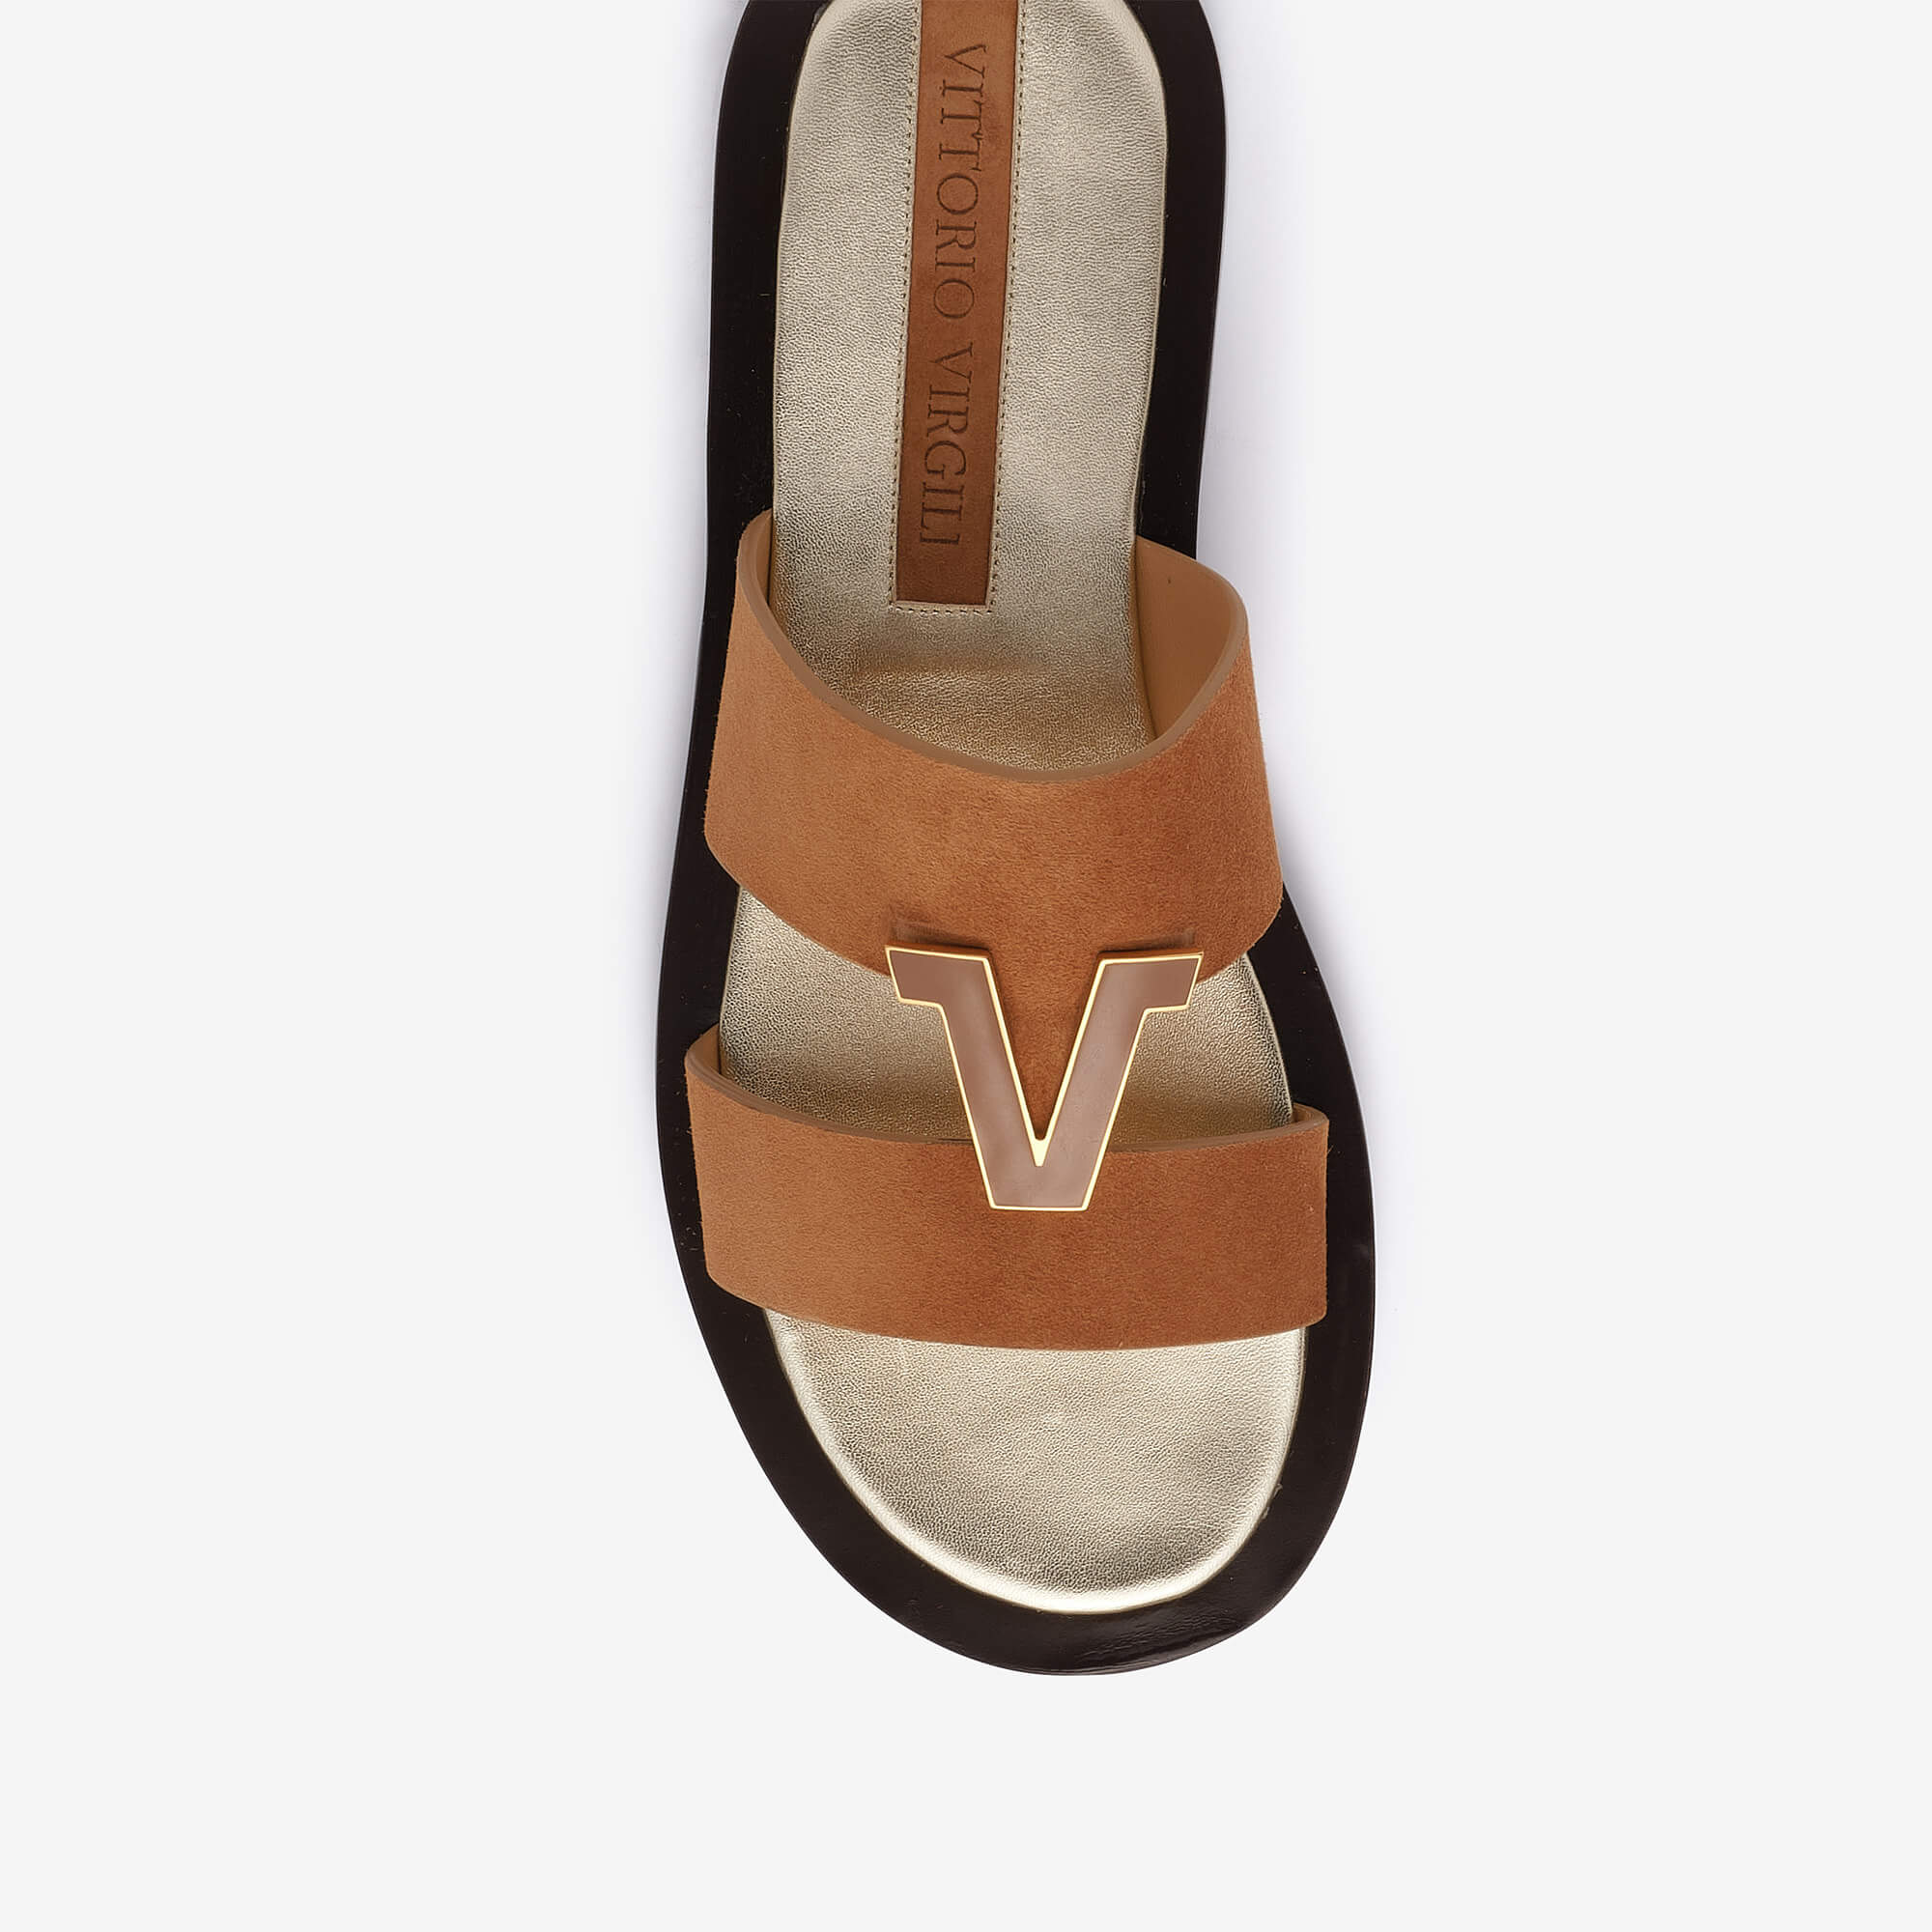 Quinctia | Women's suede-leather sandal